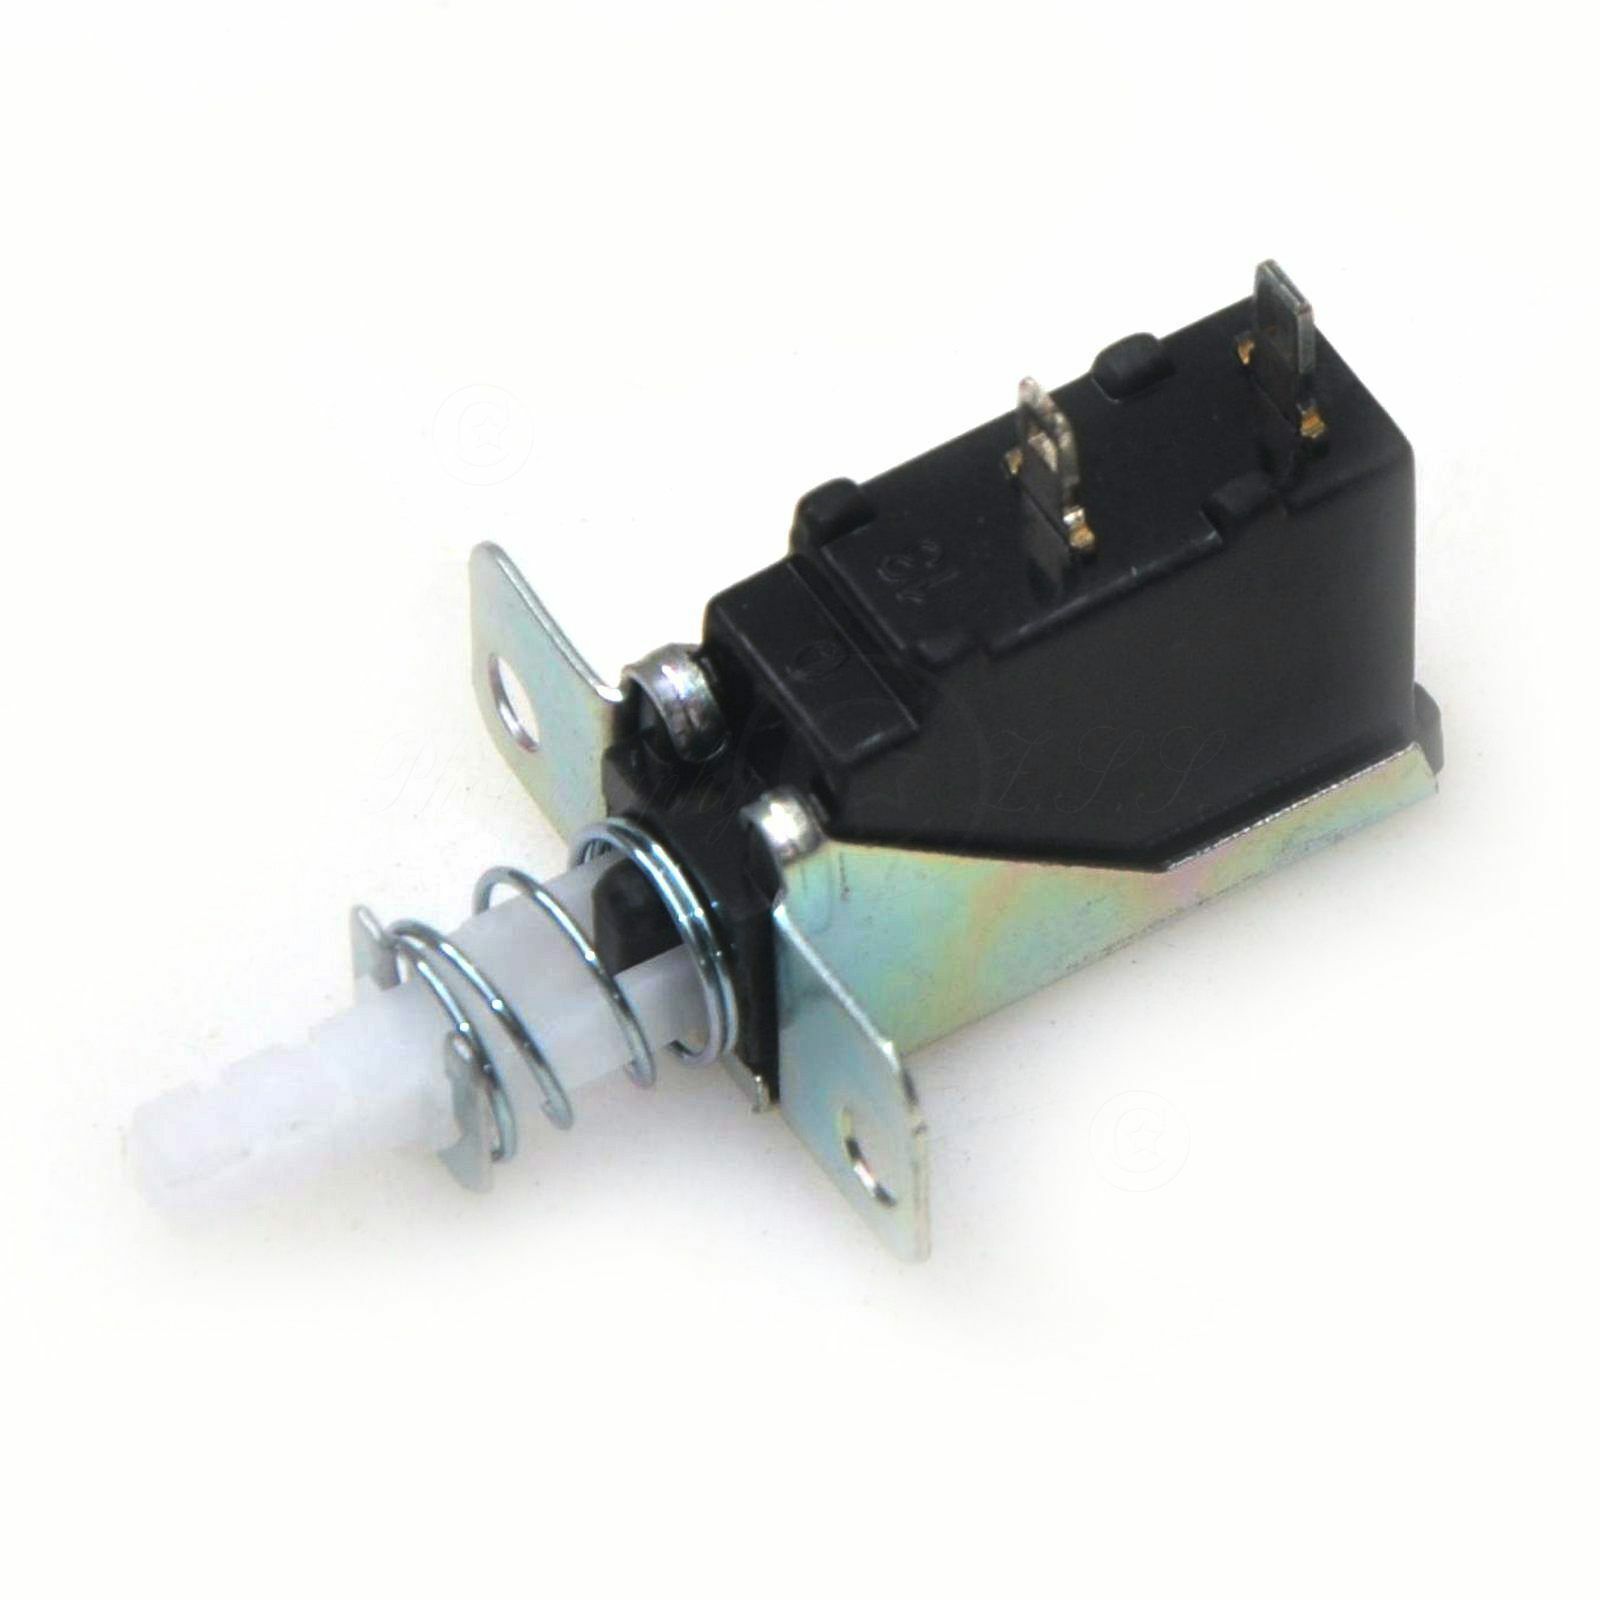 2x Universal Self-Locking Switch 2/3Pins Key Switch For Speaker Range Hood Fix